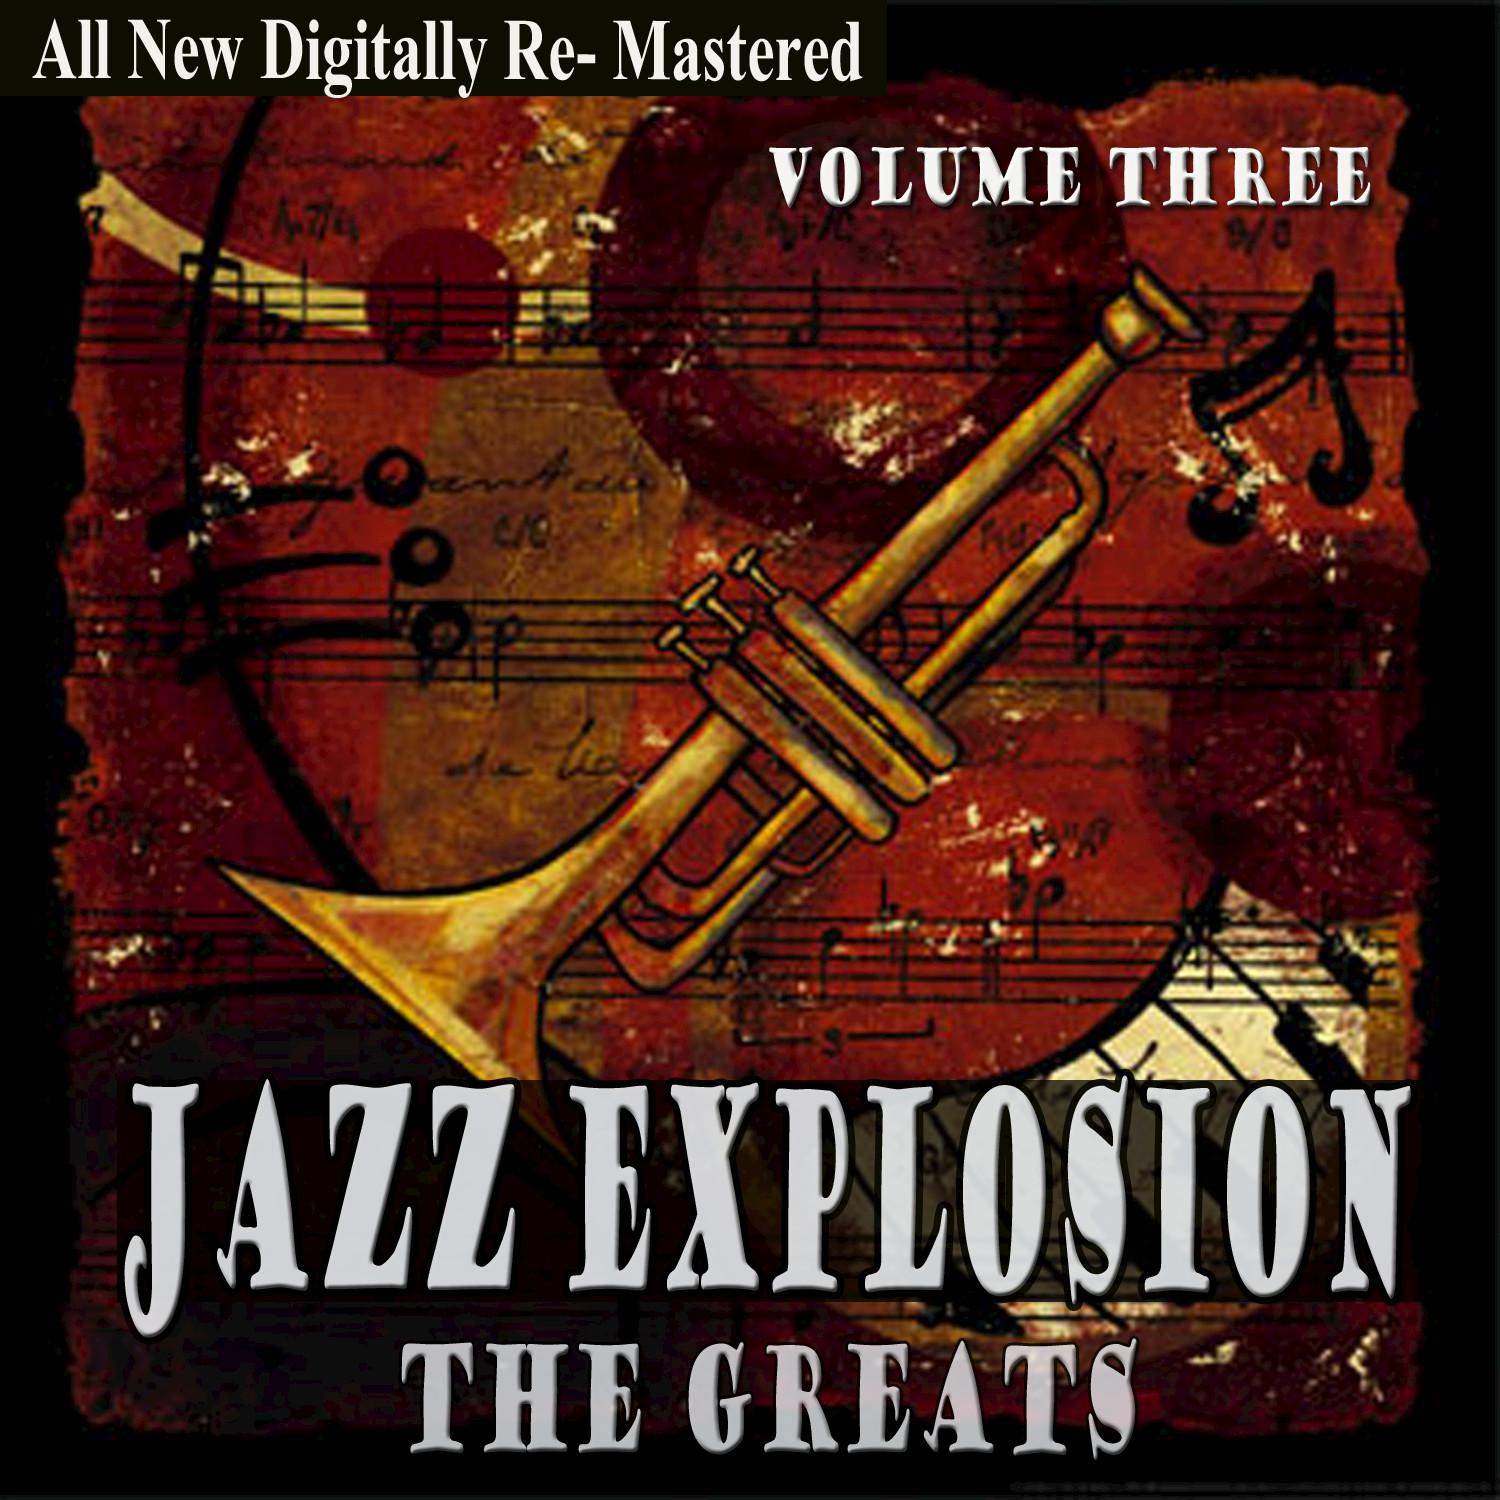 Jazz Explosion - The Greats Volume Three